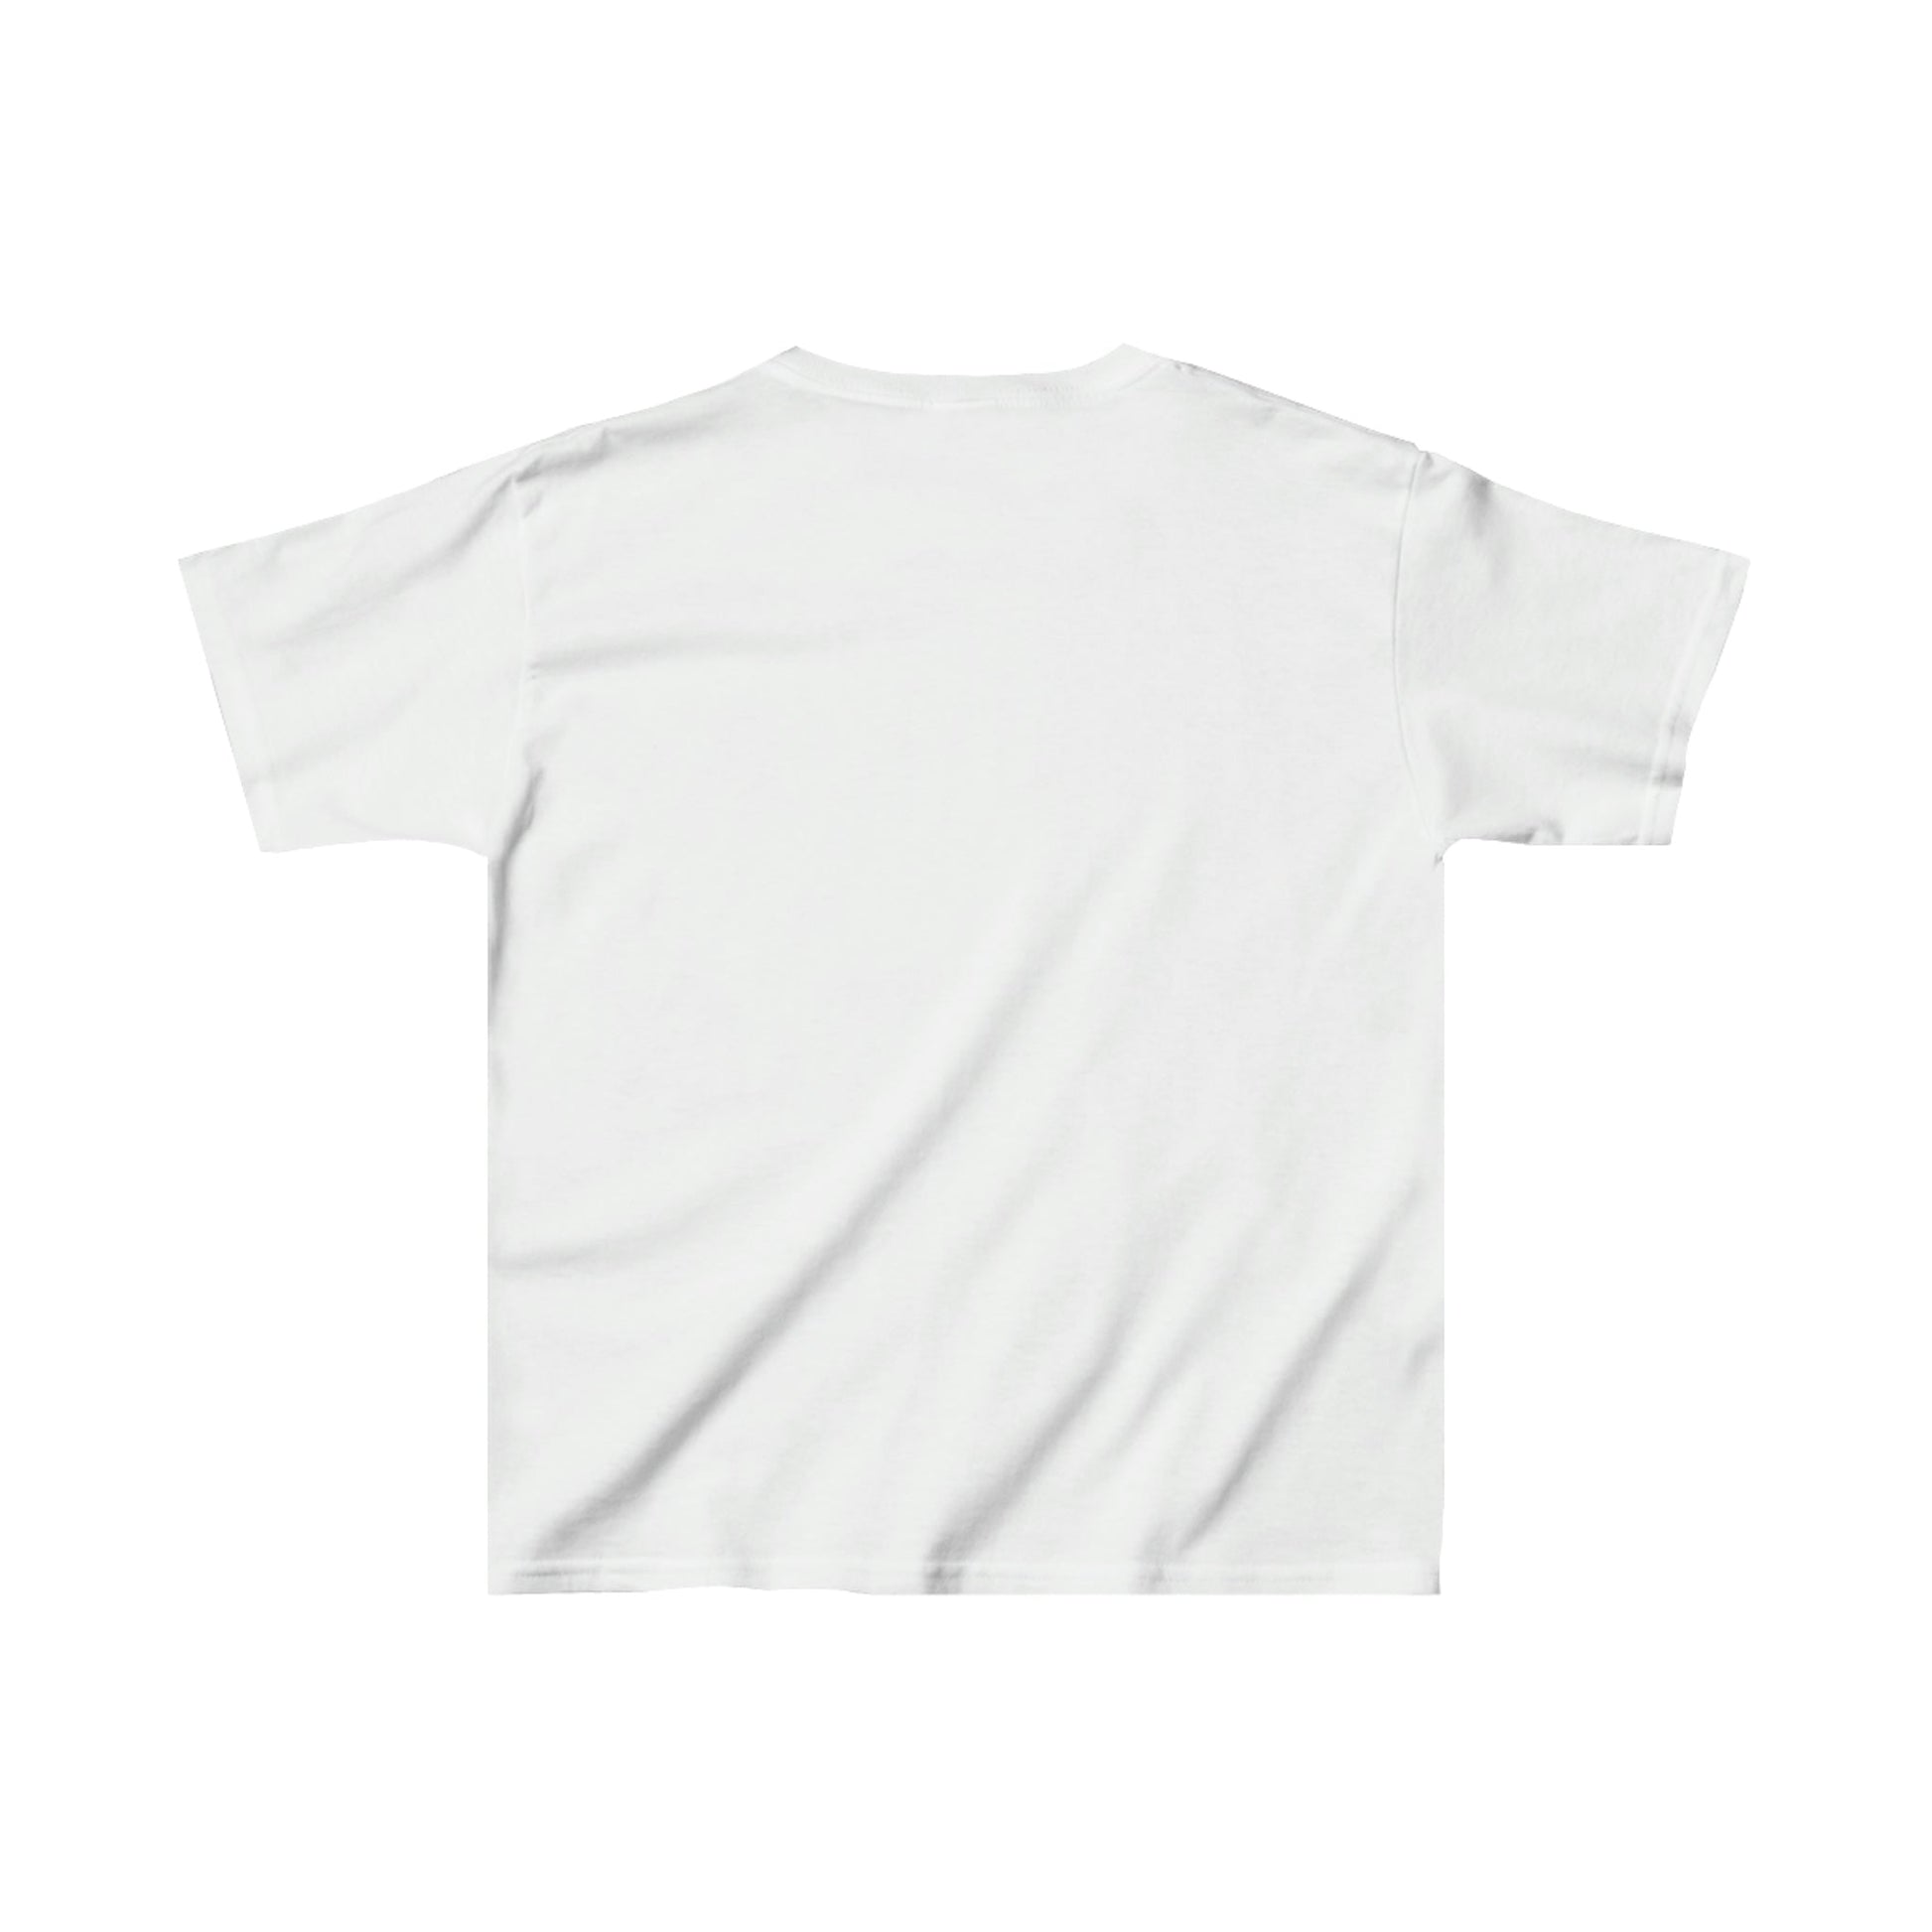 Kids Stars and Stripe Short Sleeve Cotton T-Shirt - numonet